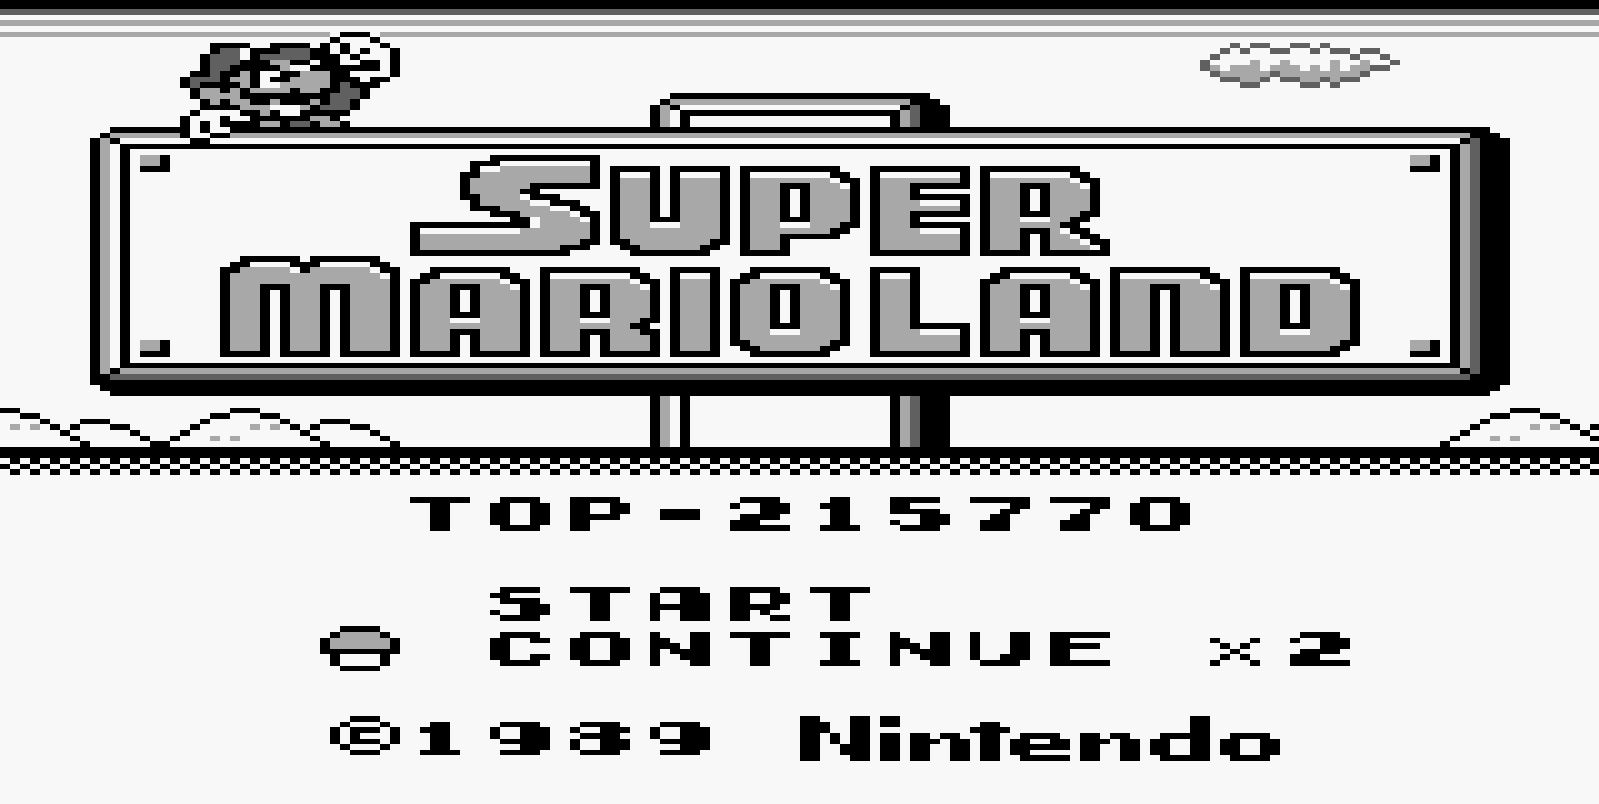 Super Mario Land 215,770 points